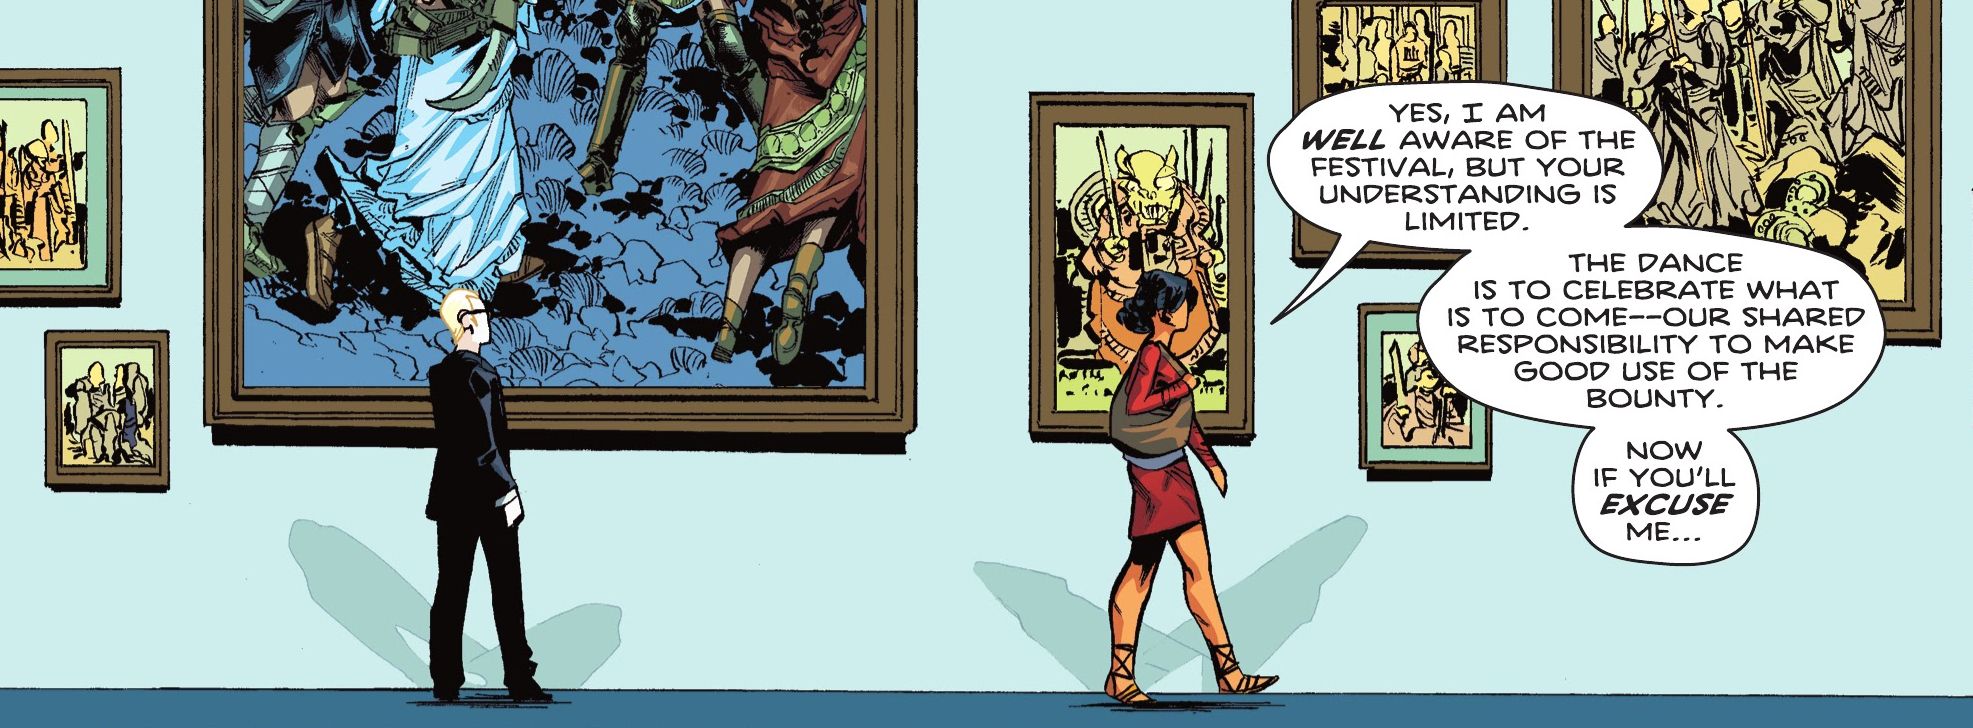 Wonder Woman at the Themyscira art exhibit